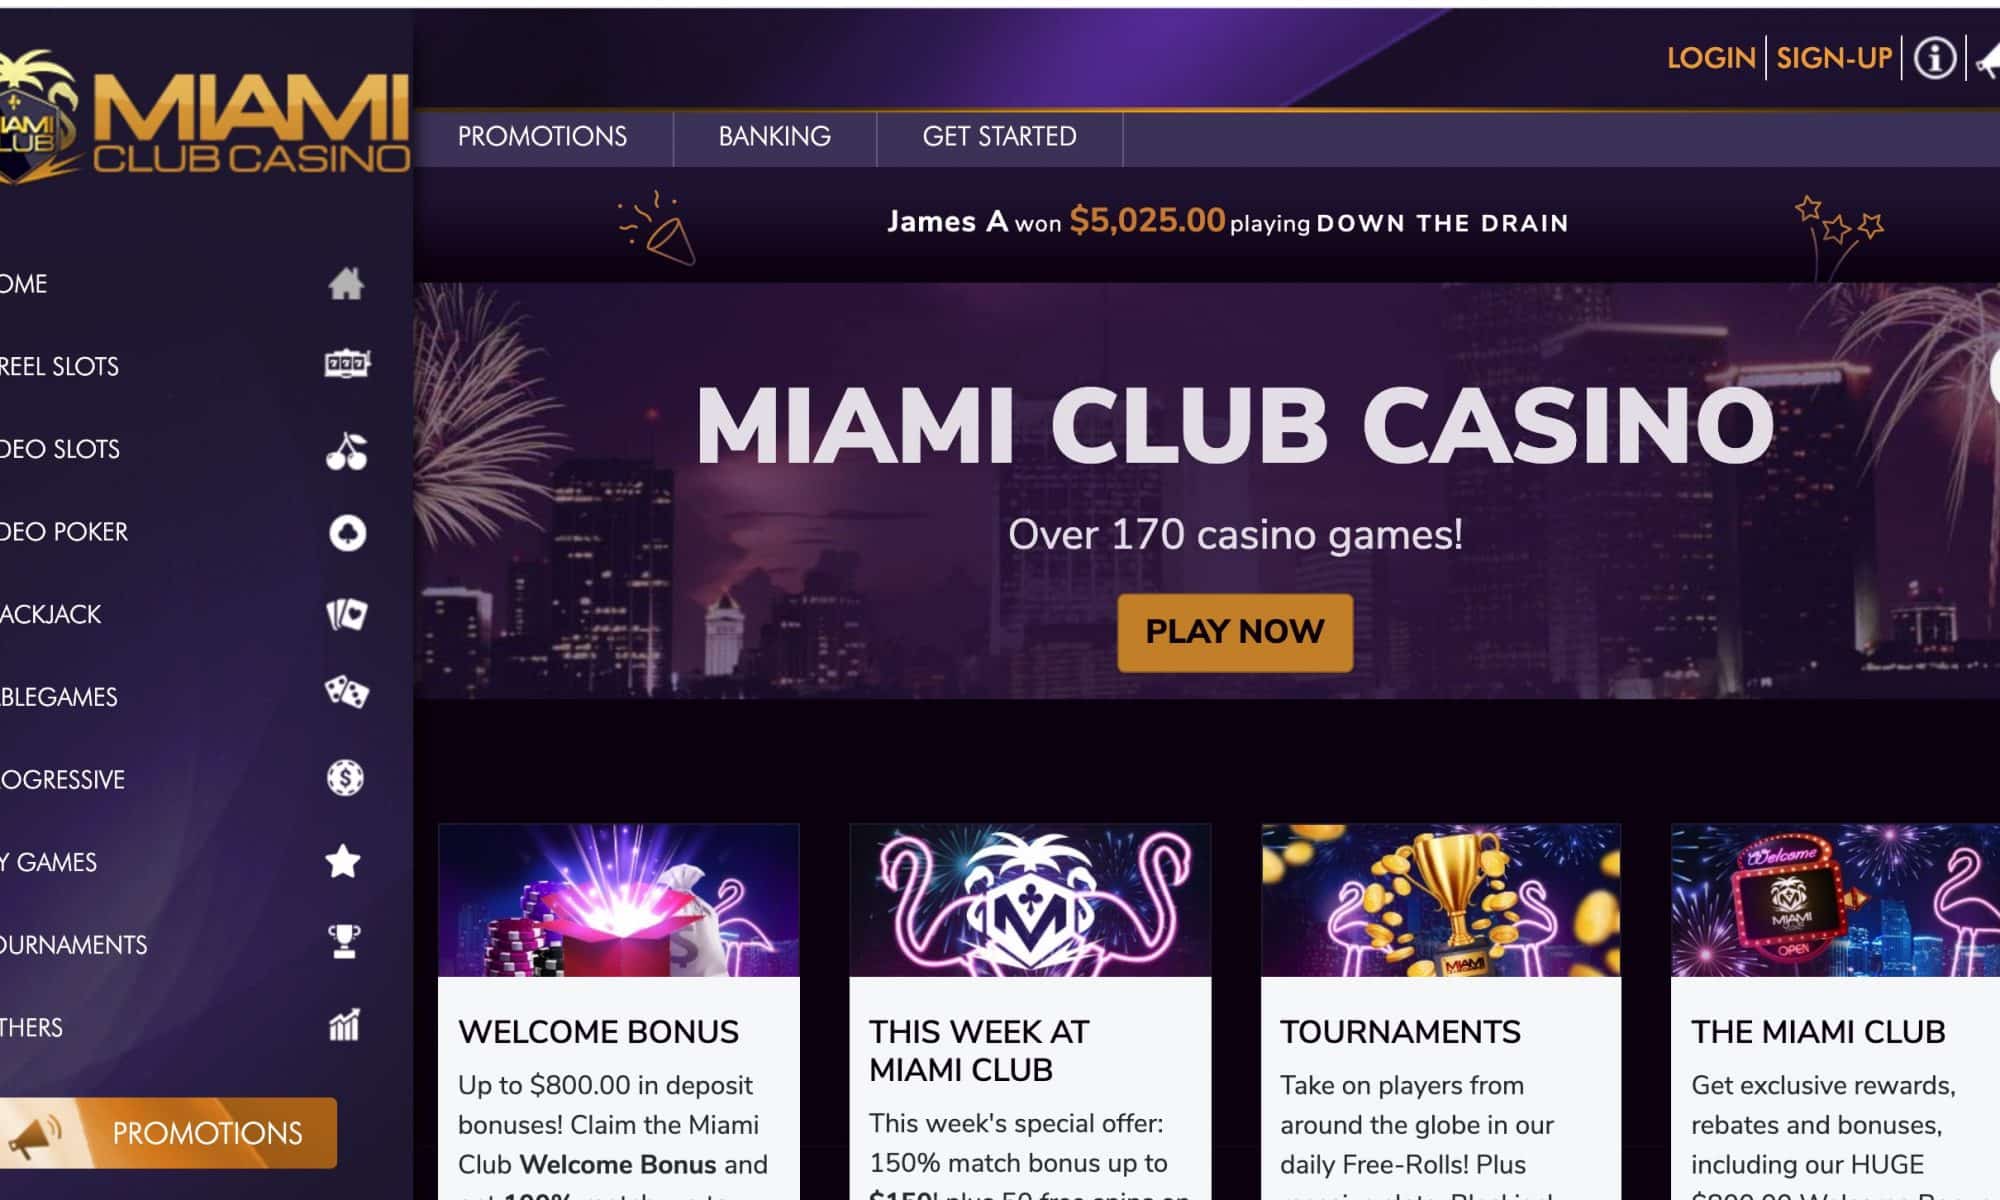 Miami Club Casino - Get 200% on 1st deposit plus $10 free